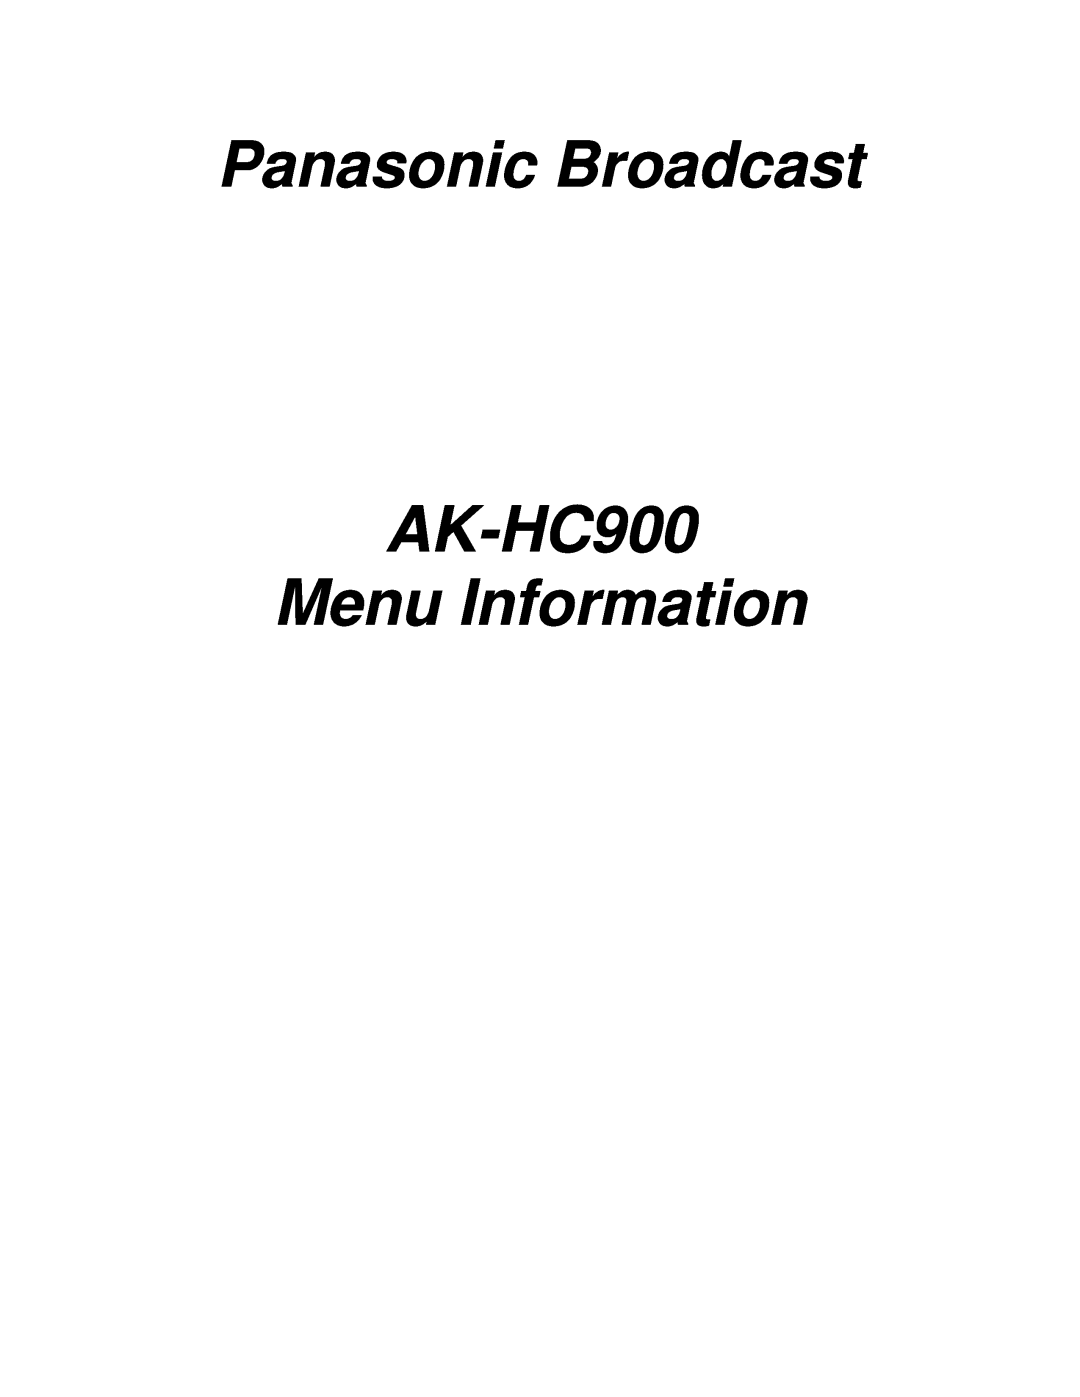 Panasonic manual Panasonic Broadcast, AK-HC900 Menu Information 